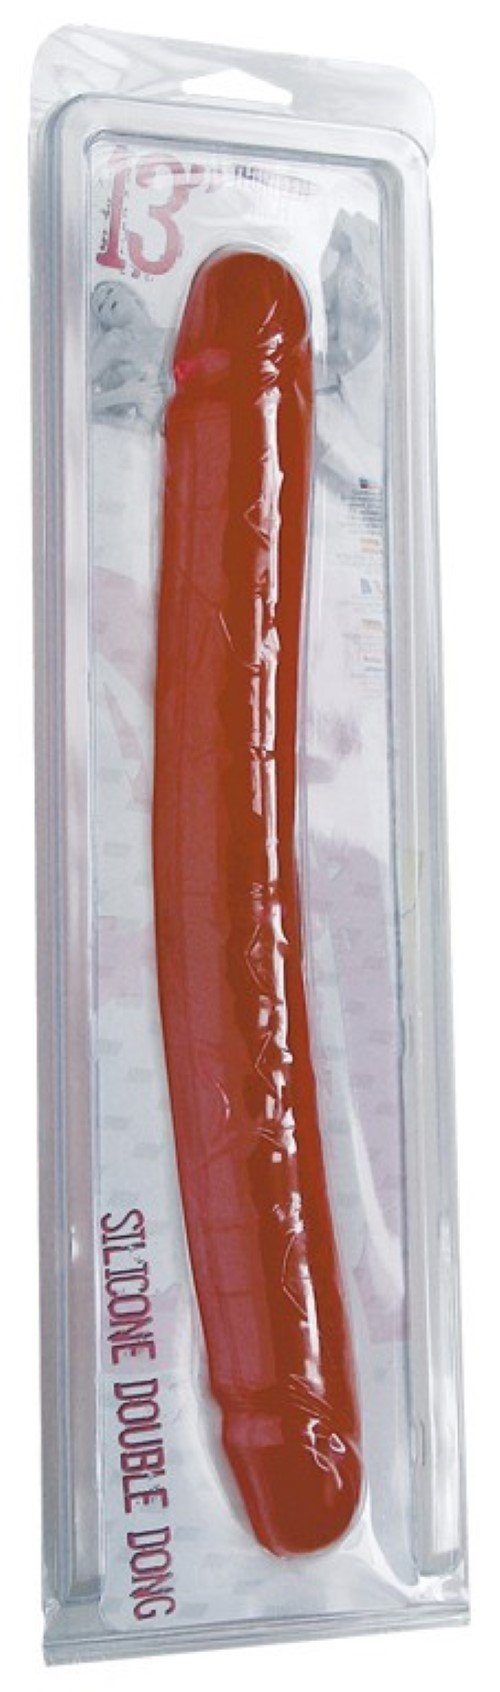 Seven Creations Doppeldildo Doppel - Penis red, 34cm